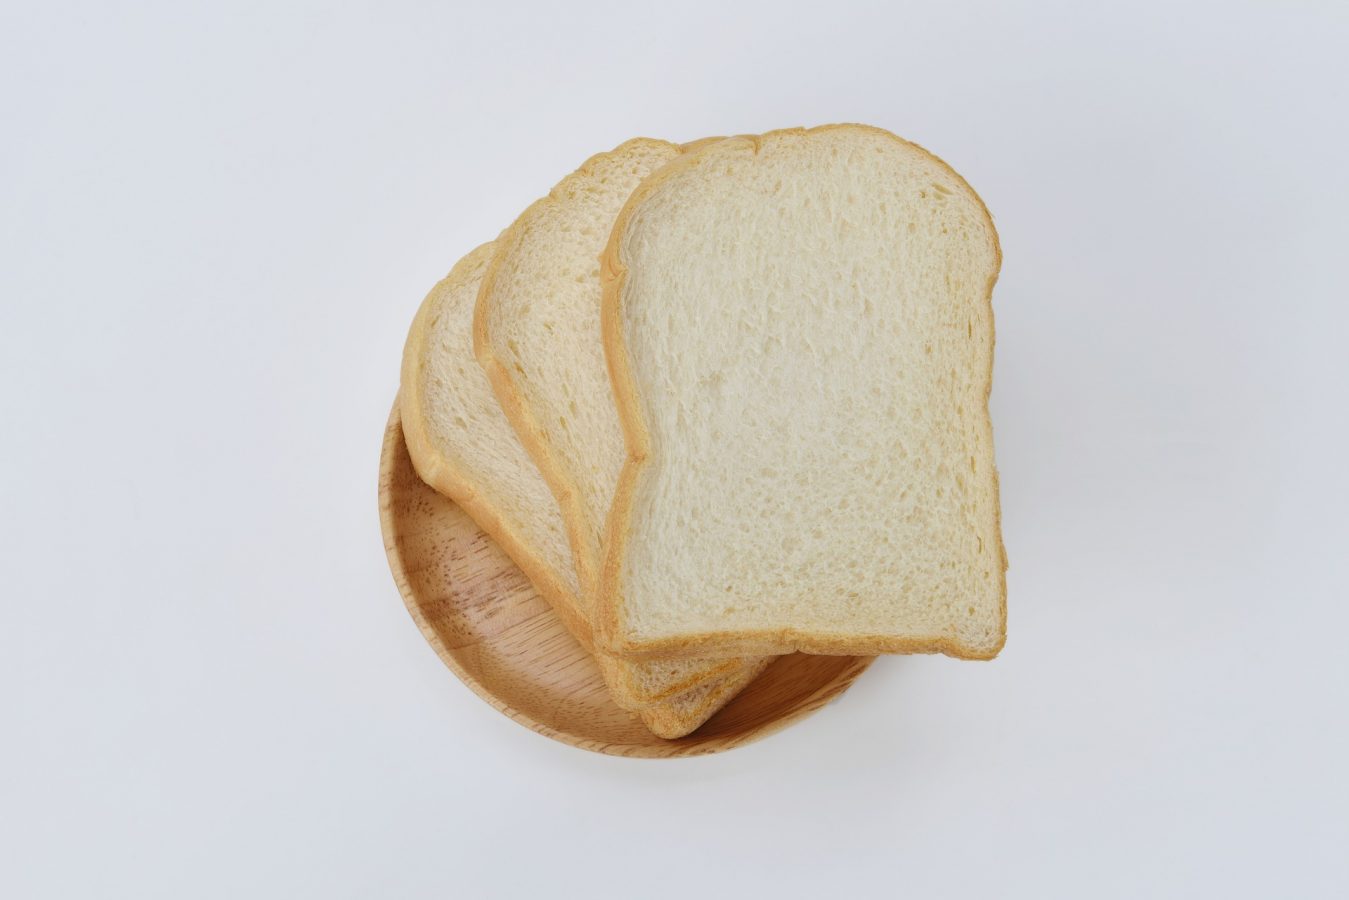 1 dilim ekmek kaç kalori?